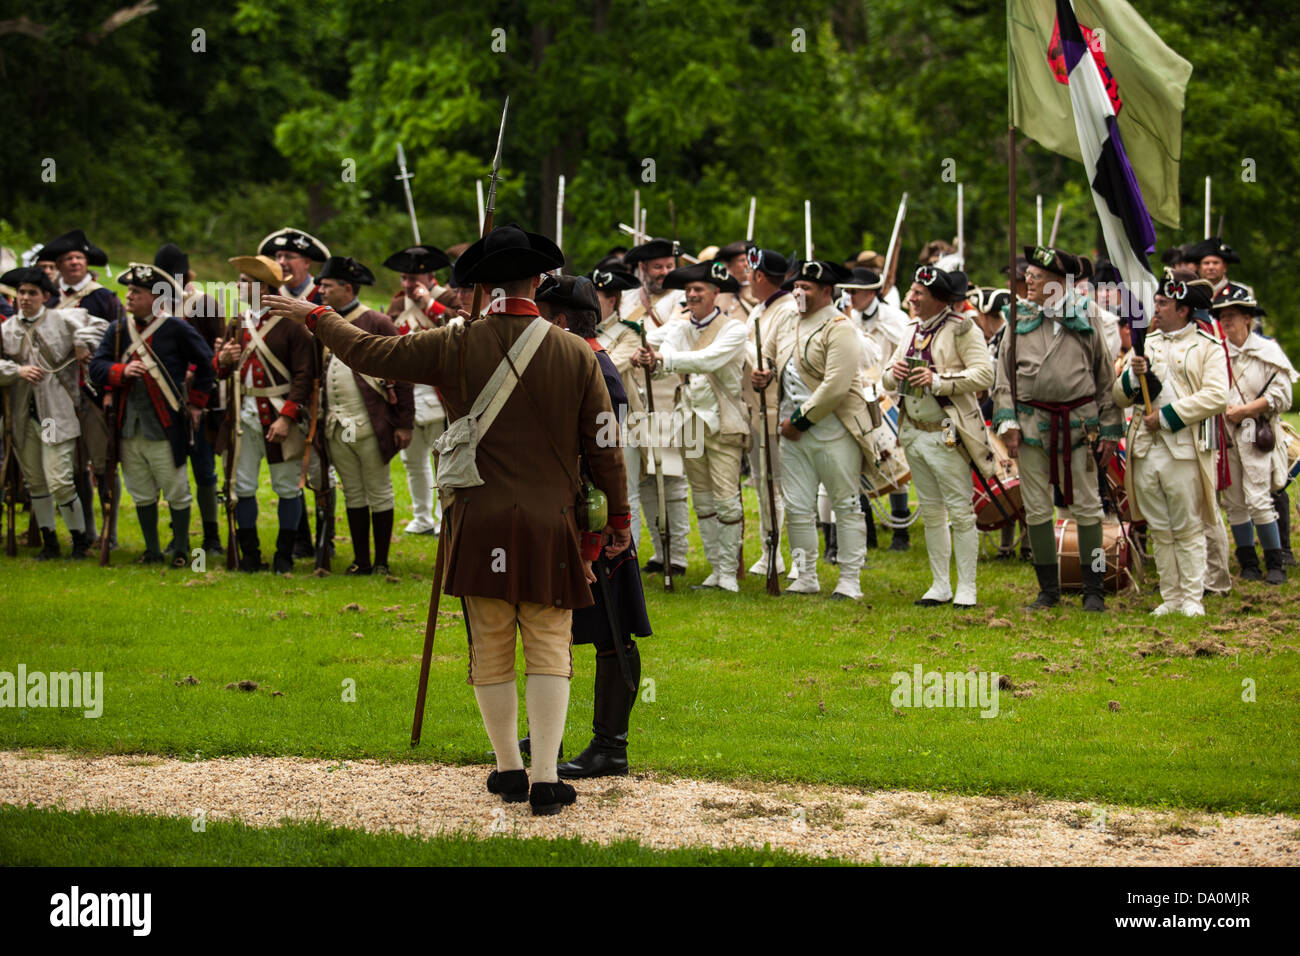 Lancaster, Pennsylvania - Revolutionary War Reenactors gather at an encampment at historic Rock Ford mansion. Stock Photo